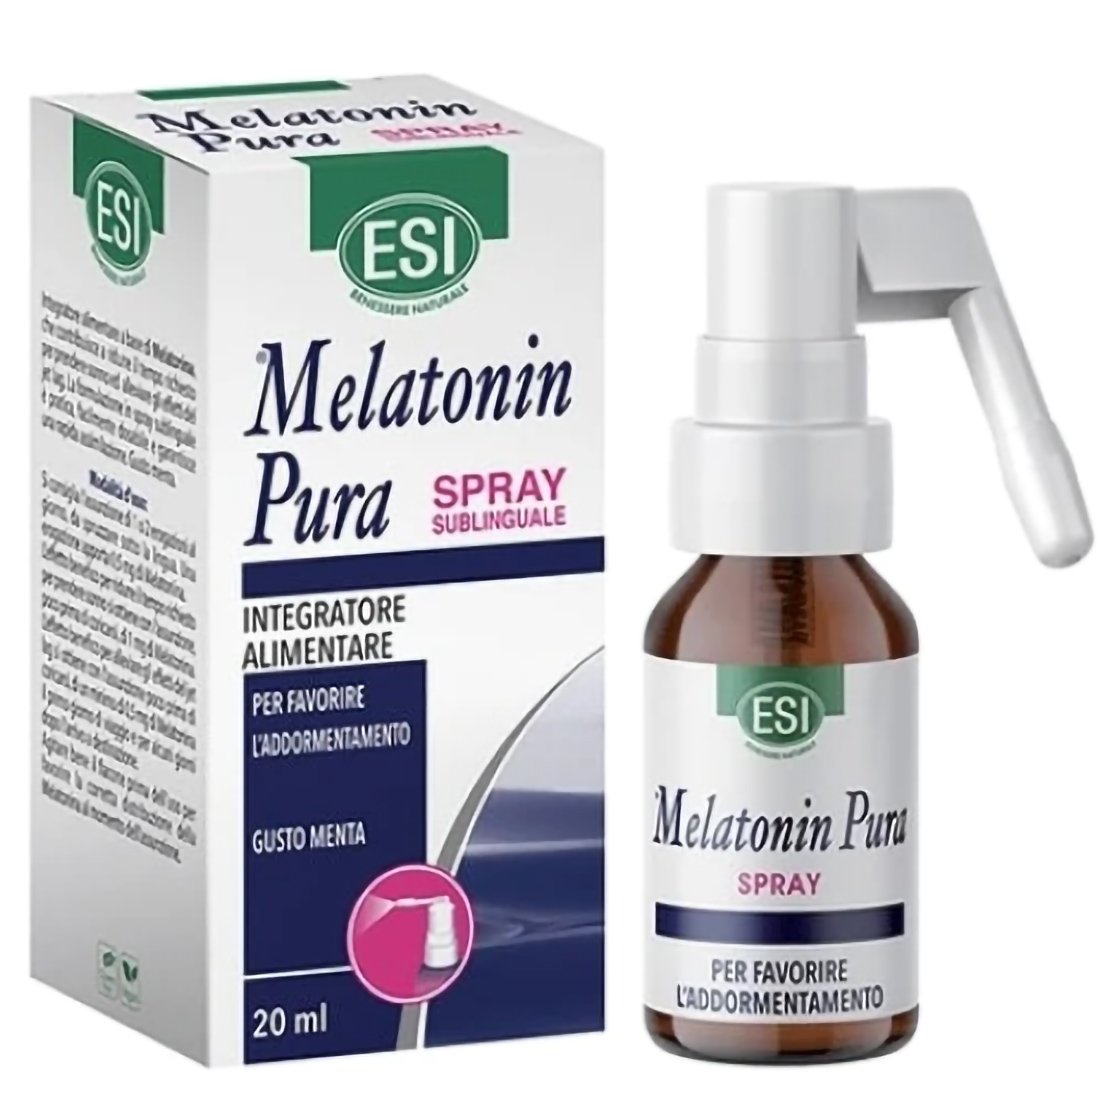 Karabinis Medical Esi Melatonin Pura Spray Sublingual Food Supplement Συμπλήρωμα Διατροφής με Μελατονίνη για τον Ύπνο, σε Μορφή Spray 20ml